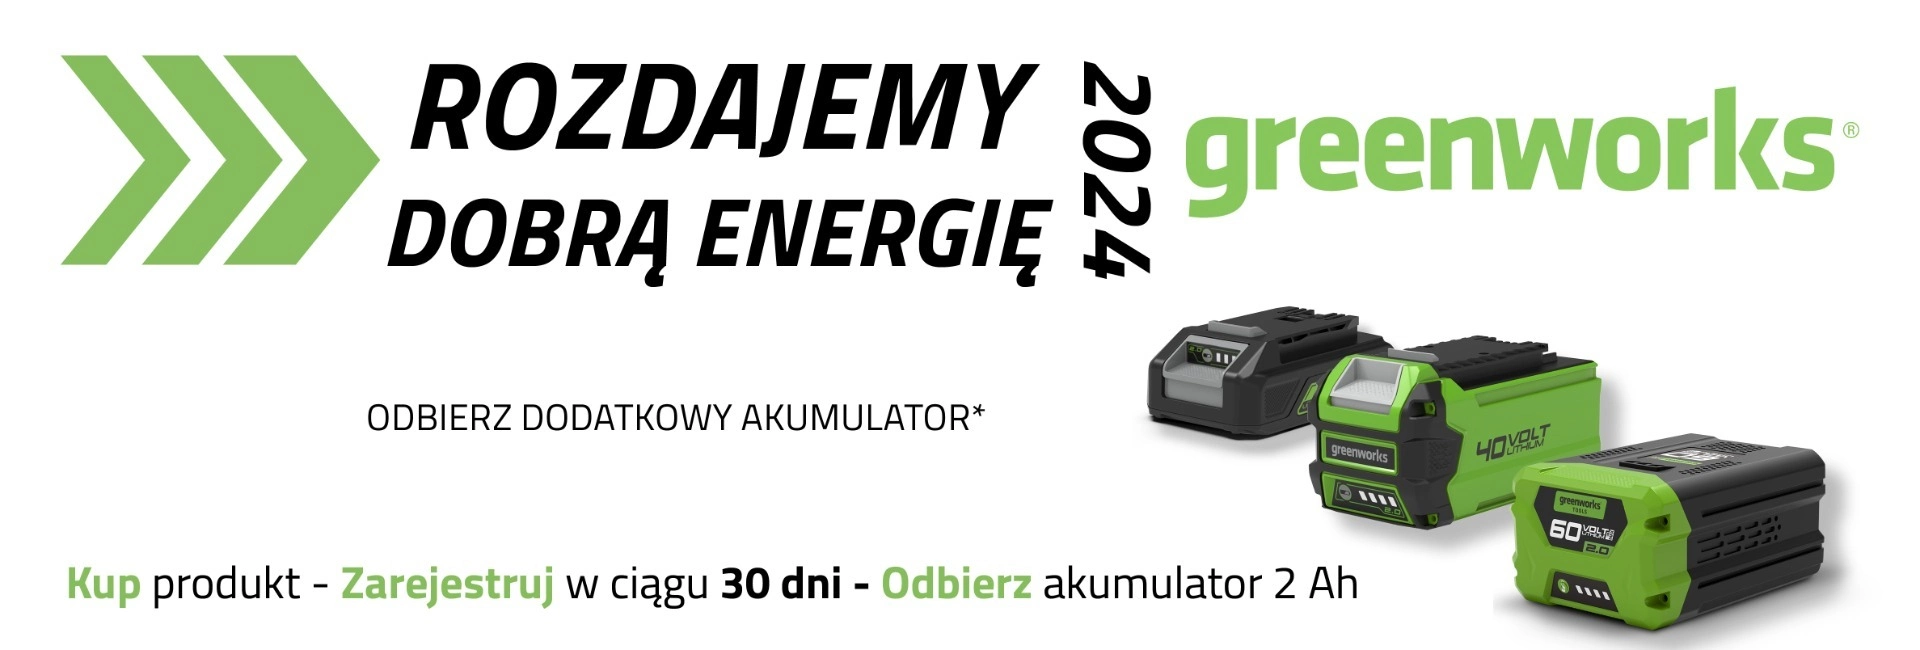 Greenworks_-_rozdajemy_dobr_energi_-_baner_strona_-_1140_x_478(1)